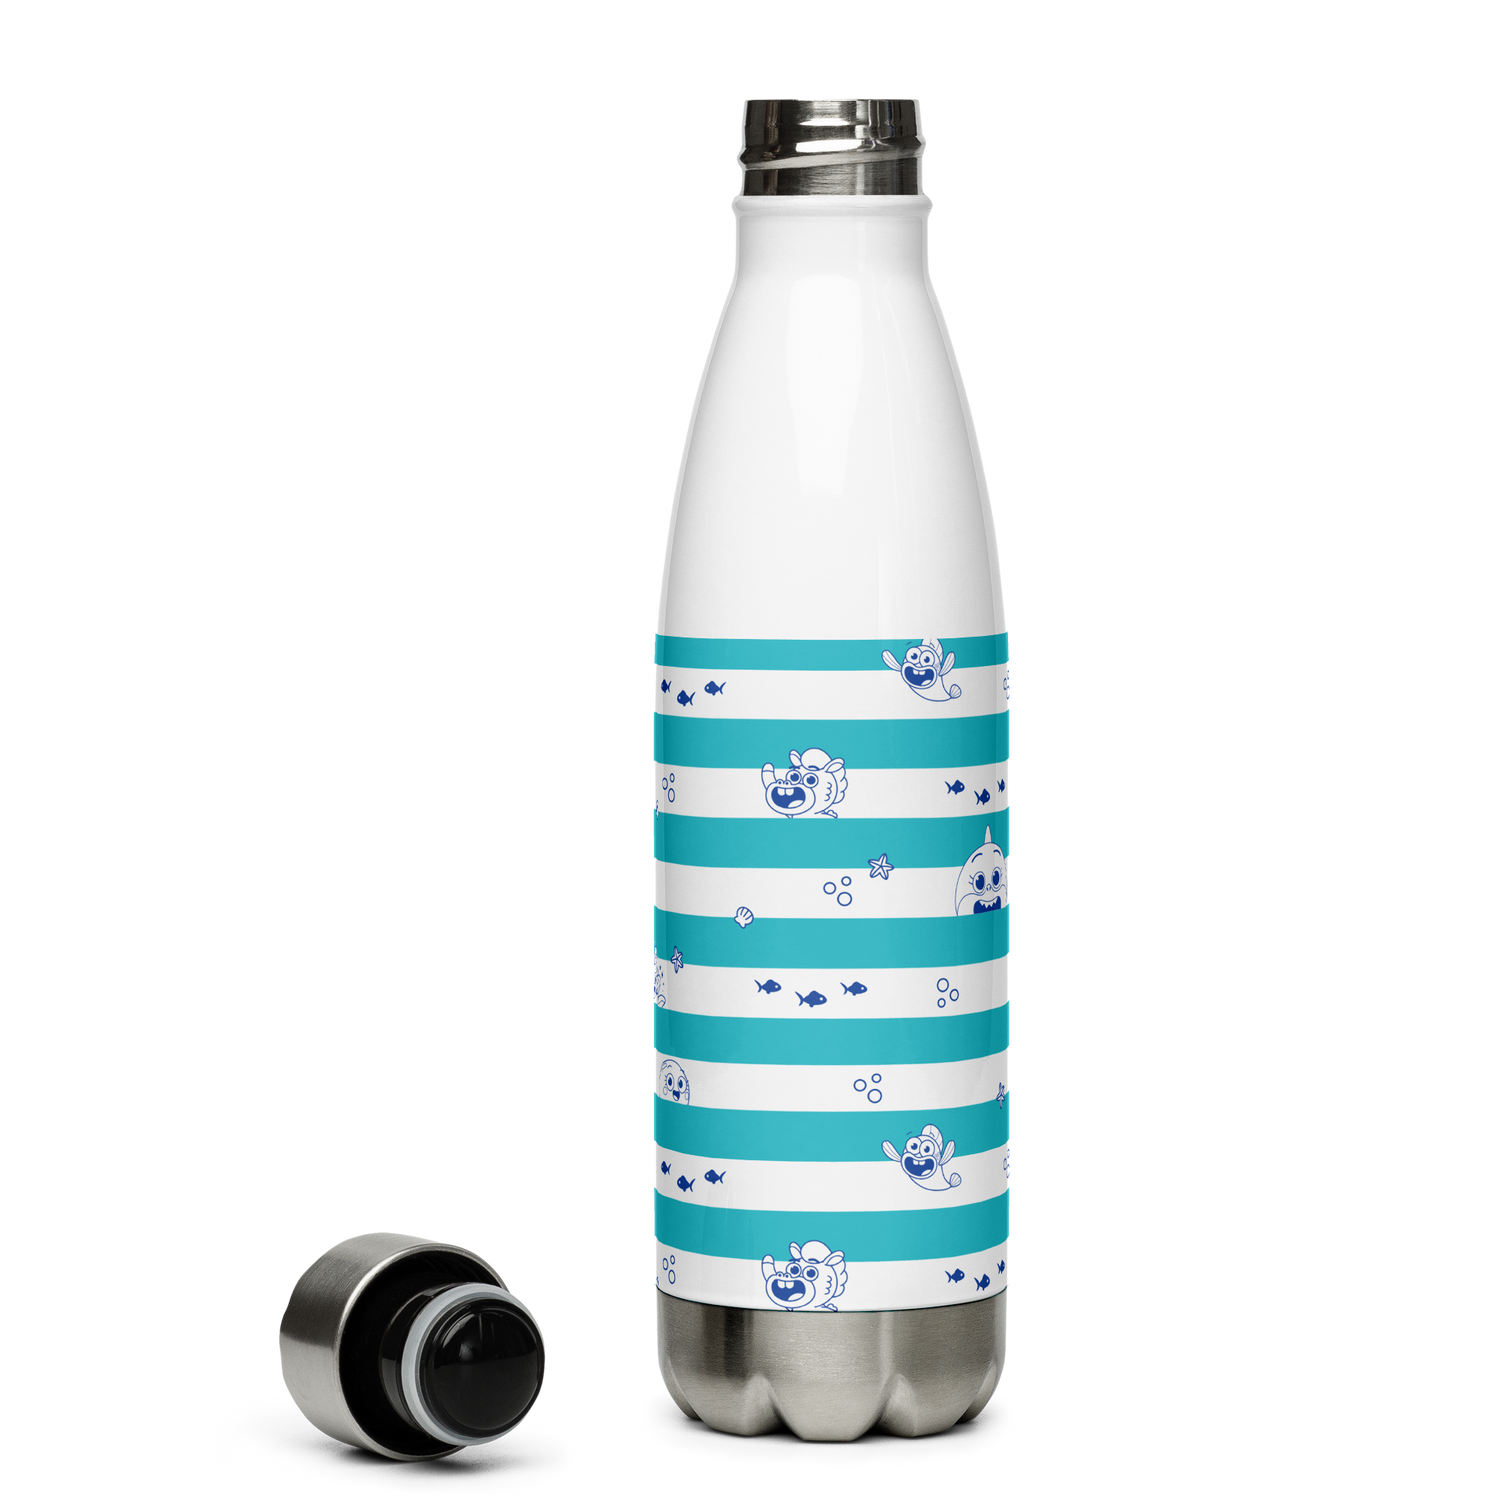 Baby Shark Striped Stainless Steel Water Bottle